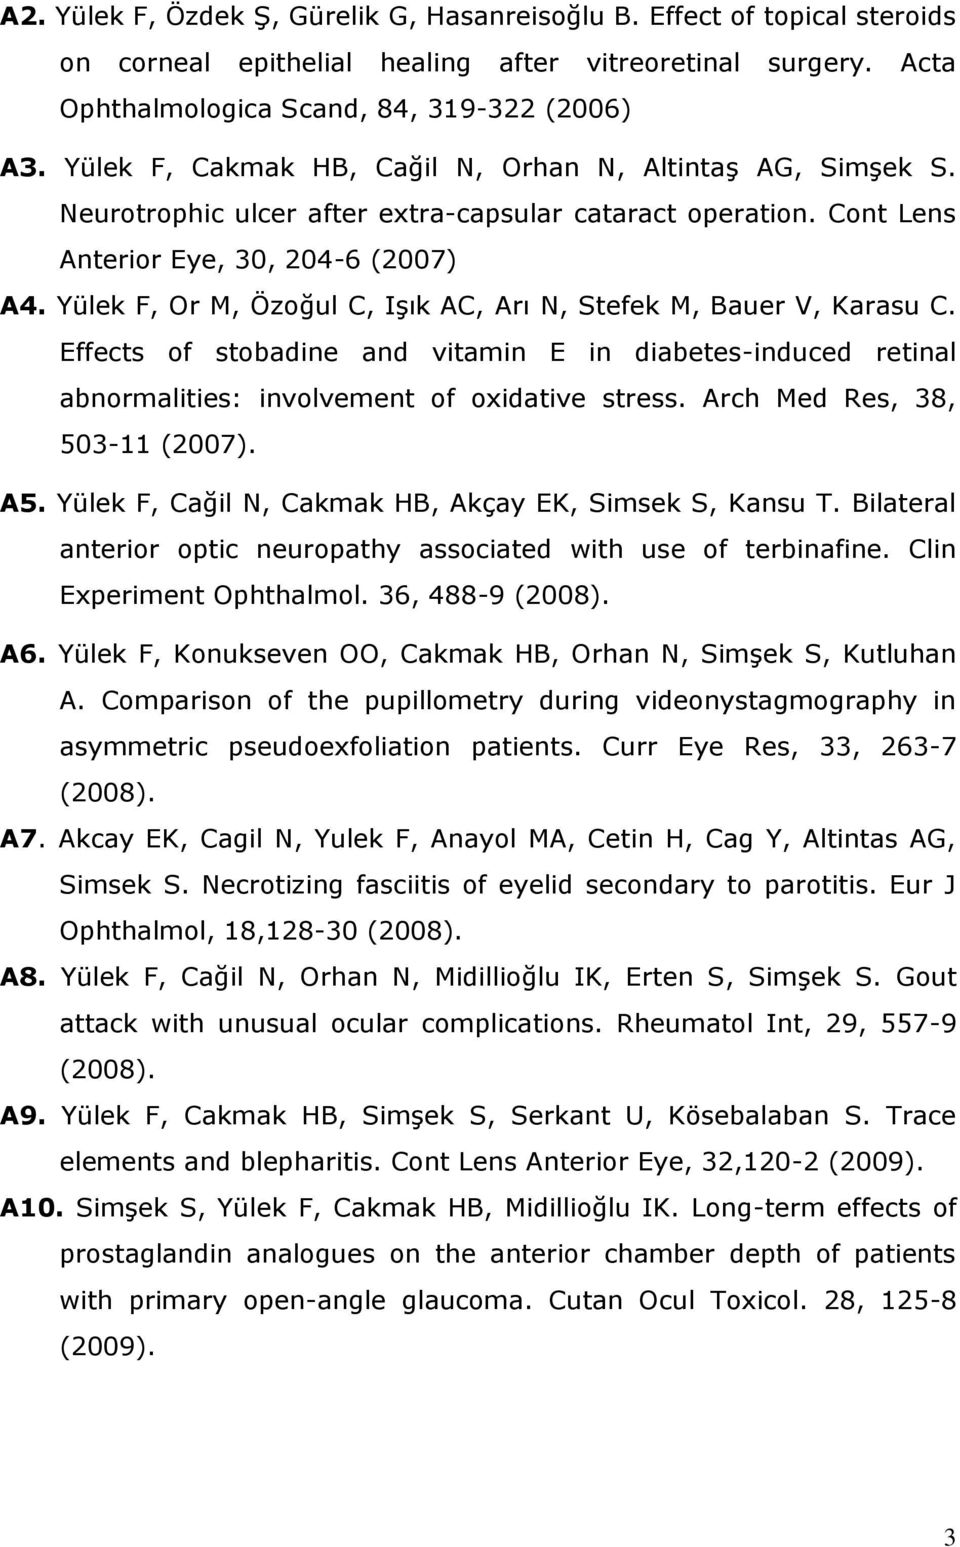 Yülek F, Or M, Özoğul C, Işık AC, Arı N, Stefek M, Bauer V, Karasu C. Effects of stobadine and vitamin E in diabetes-induced retinal abnormalities: involvement of oxidative stress.